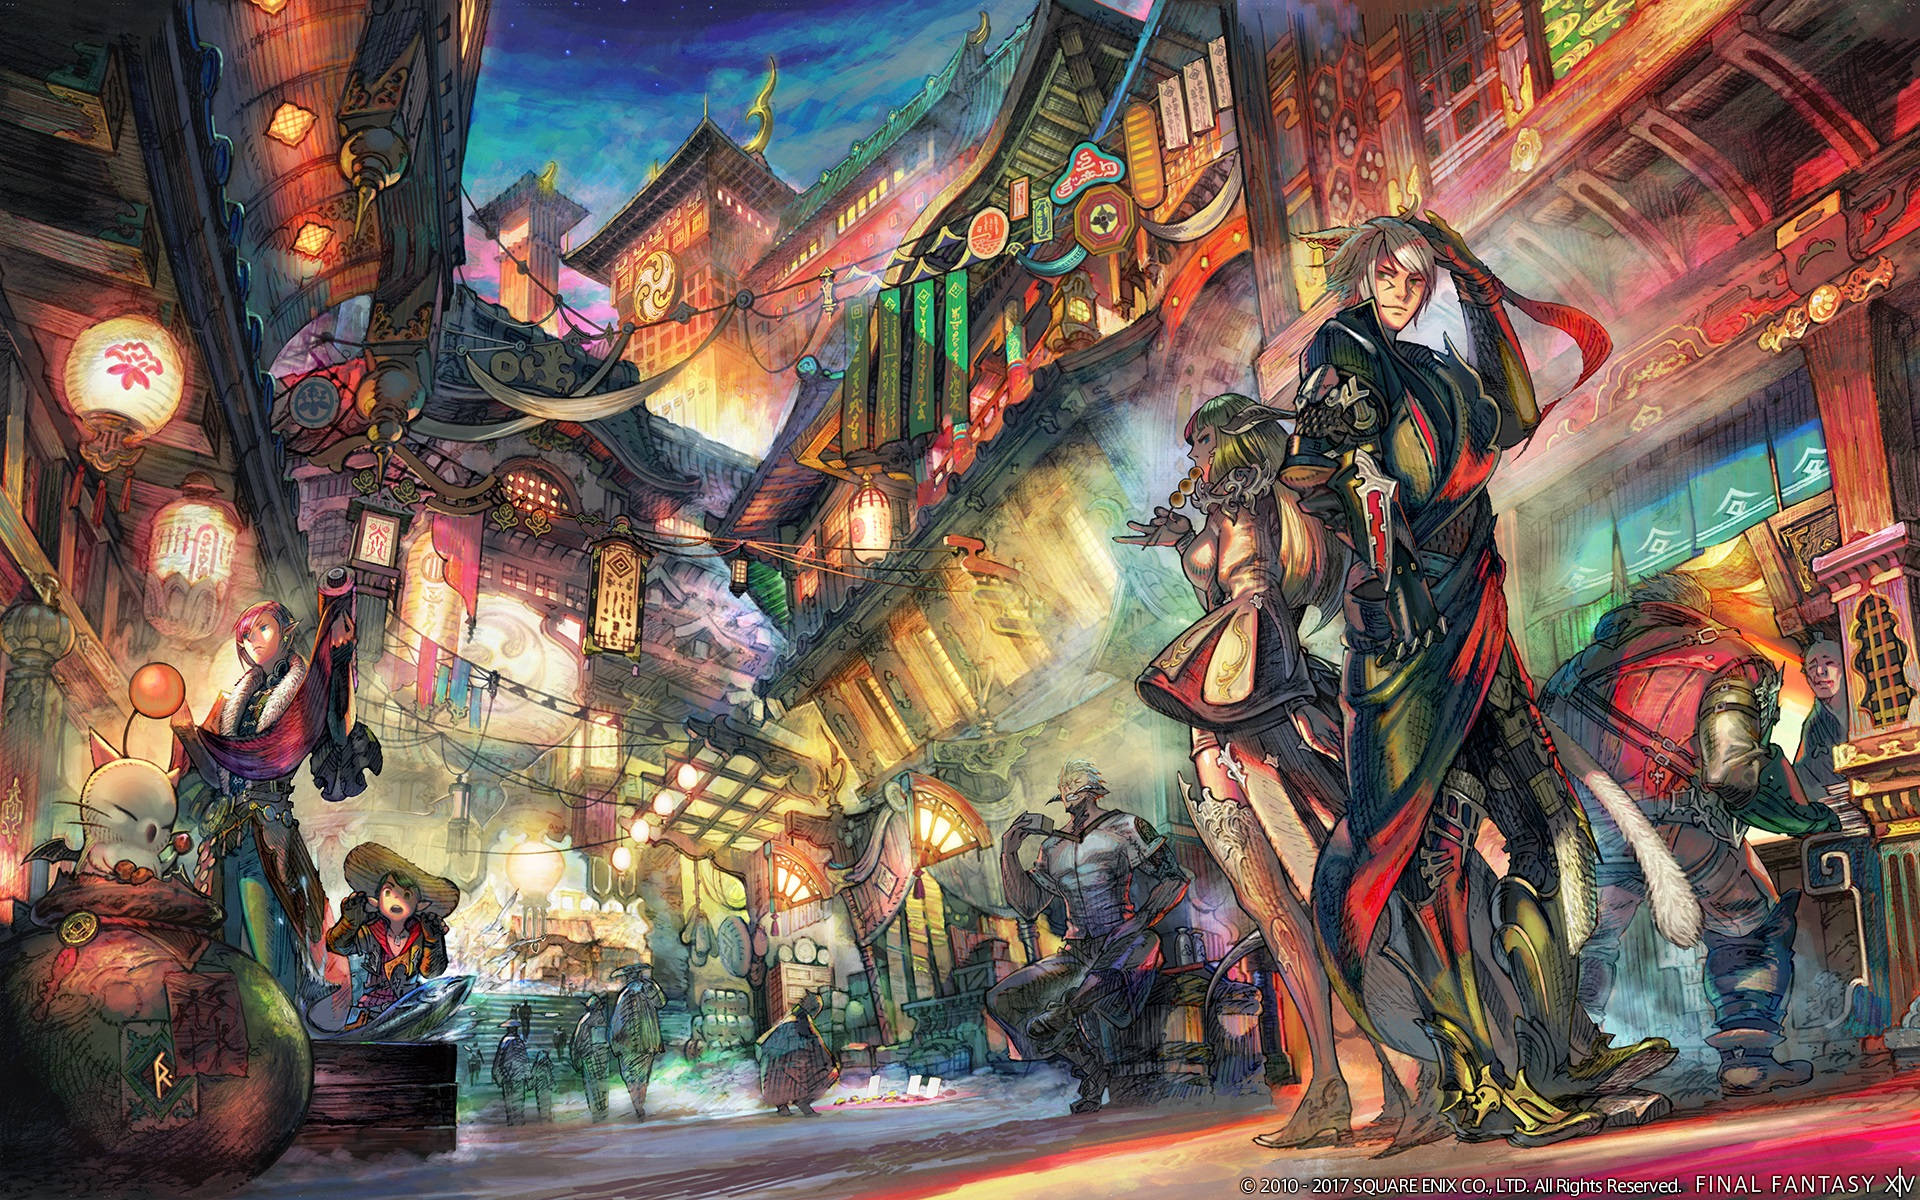 Top 999+ Final Fantasy Xiv Wallpaper Full HD, 4K✅Free to Use